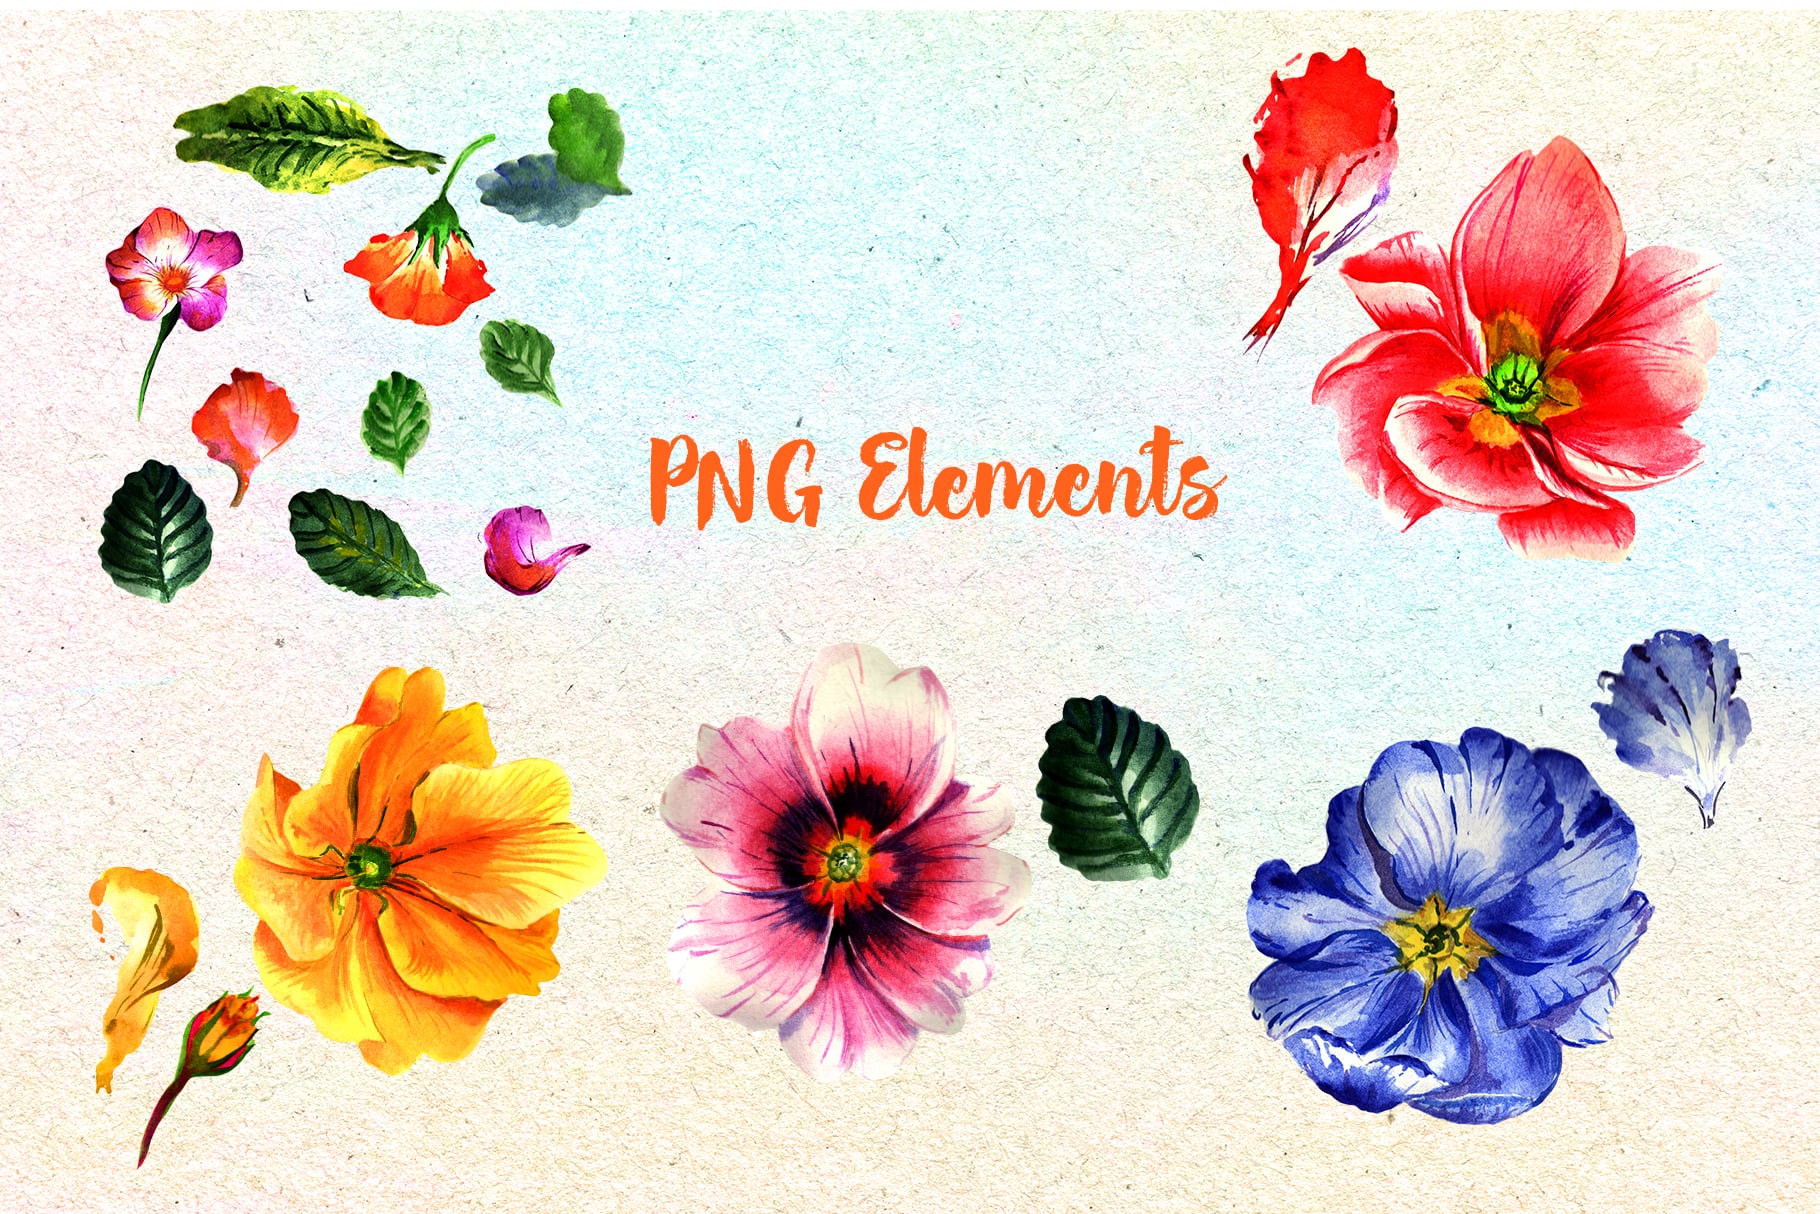 Flowers elements.